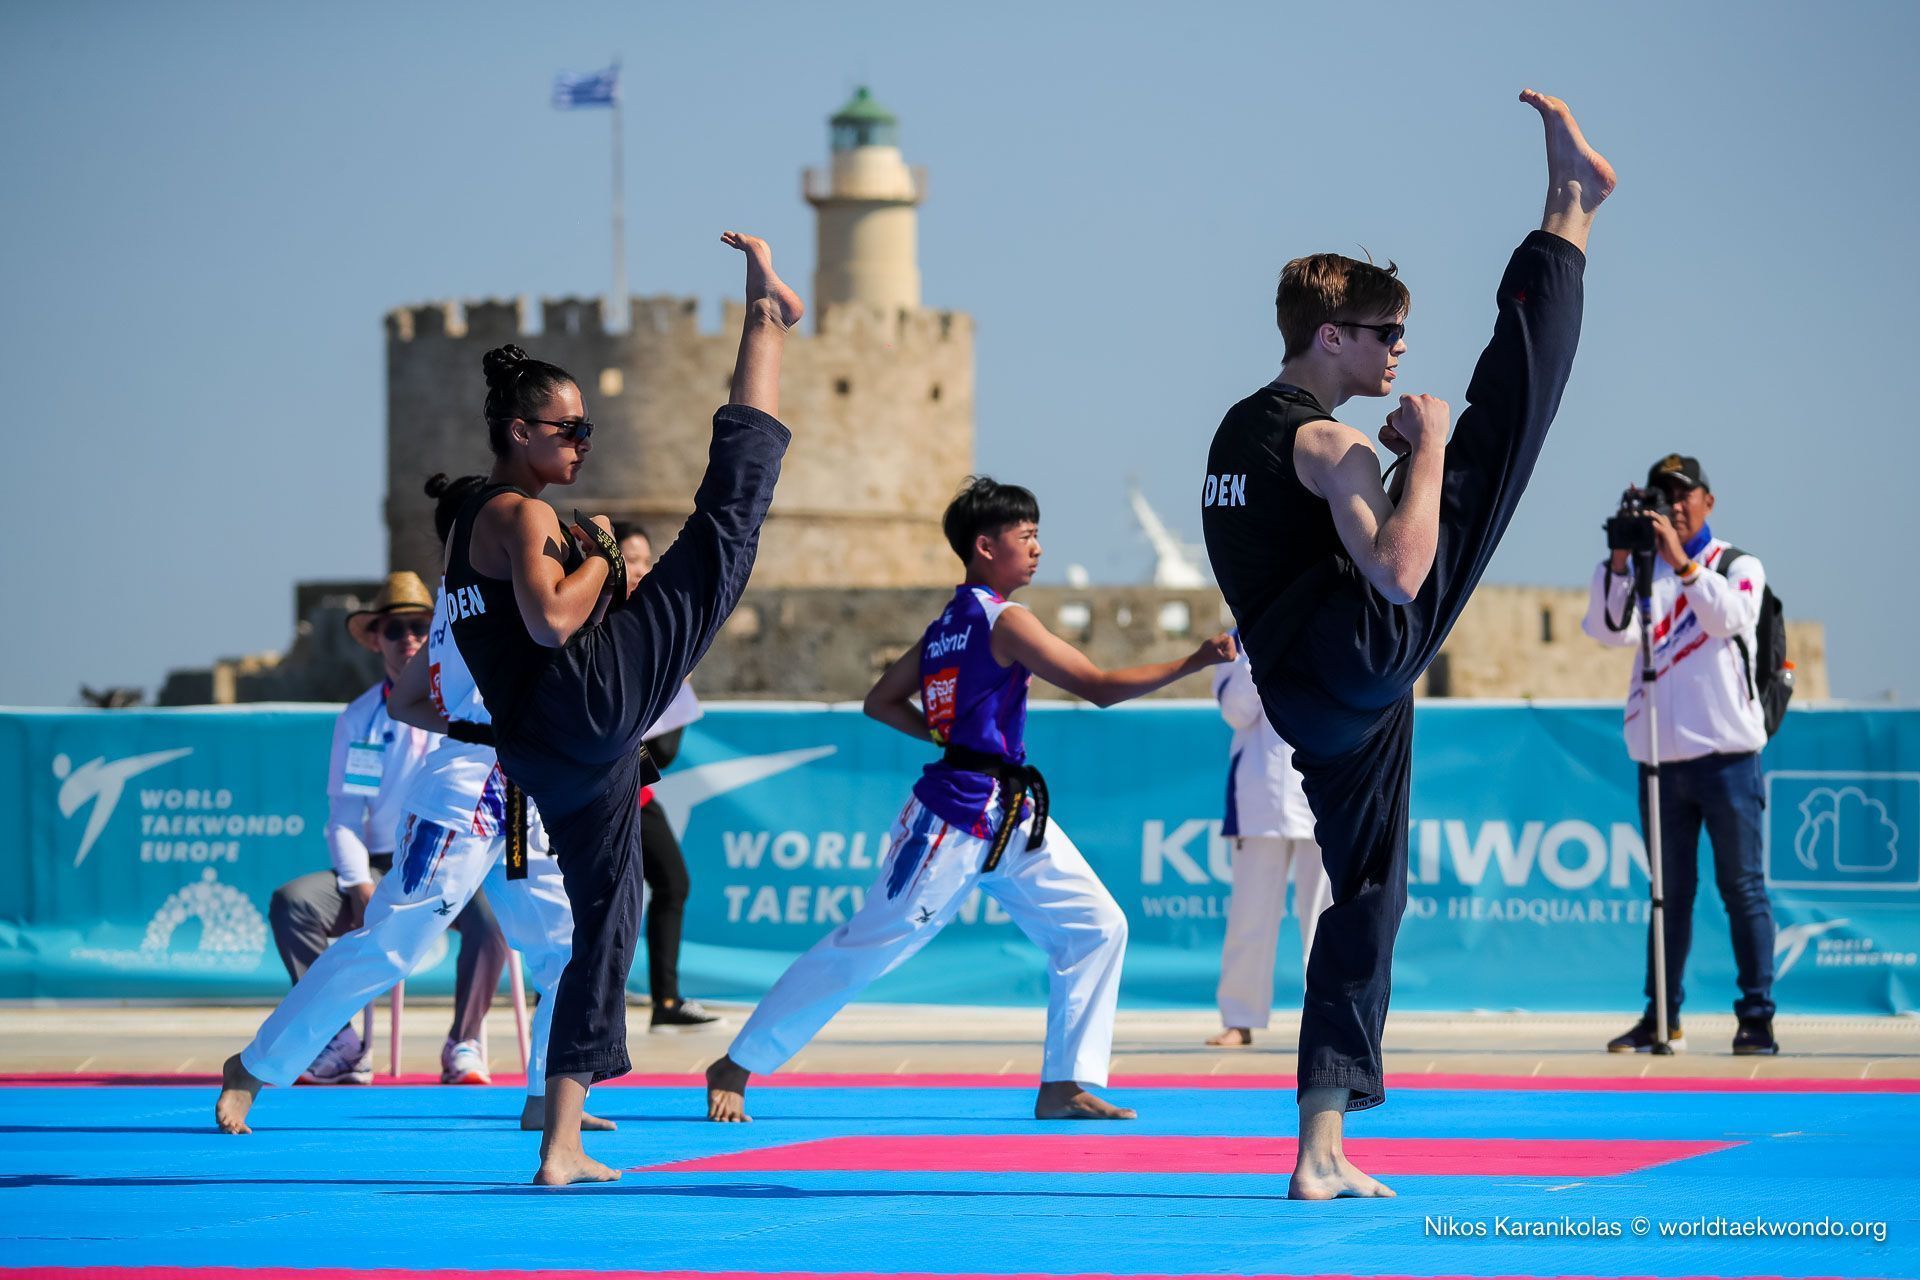 1st World Taekwondo Beach Championship on Rhodes. Photo Credits: Nikos Karanikolas